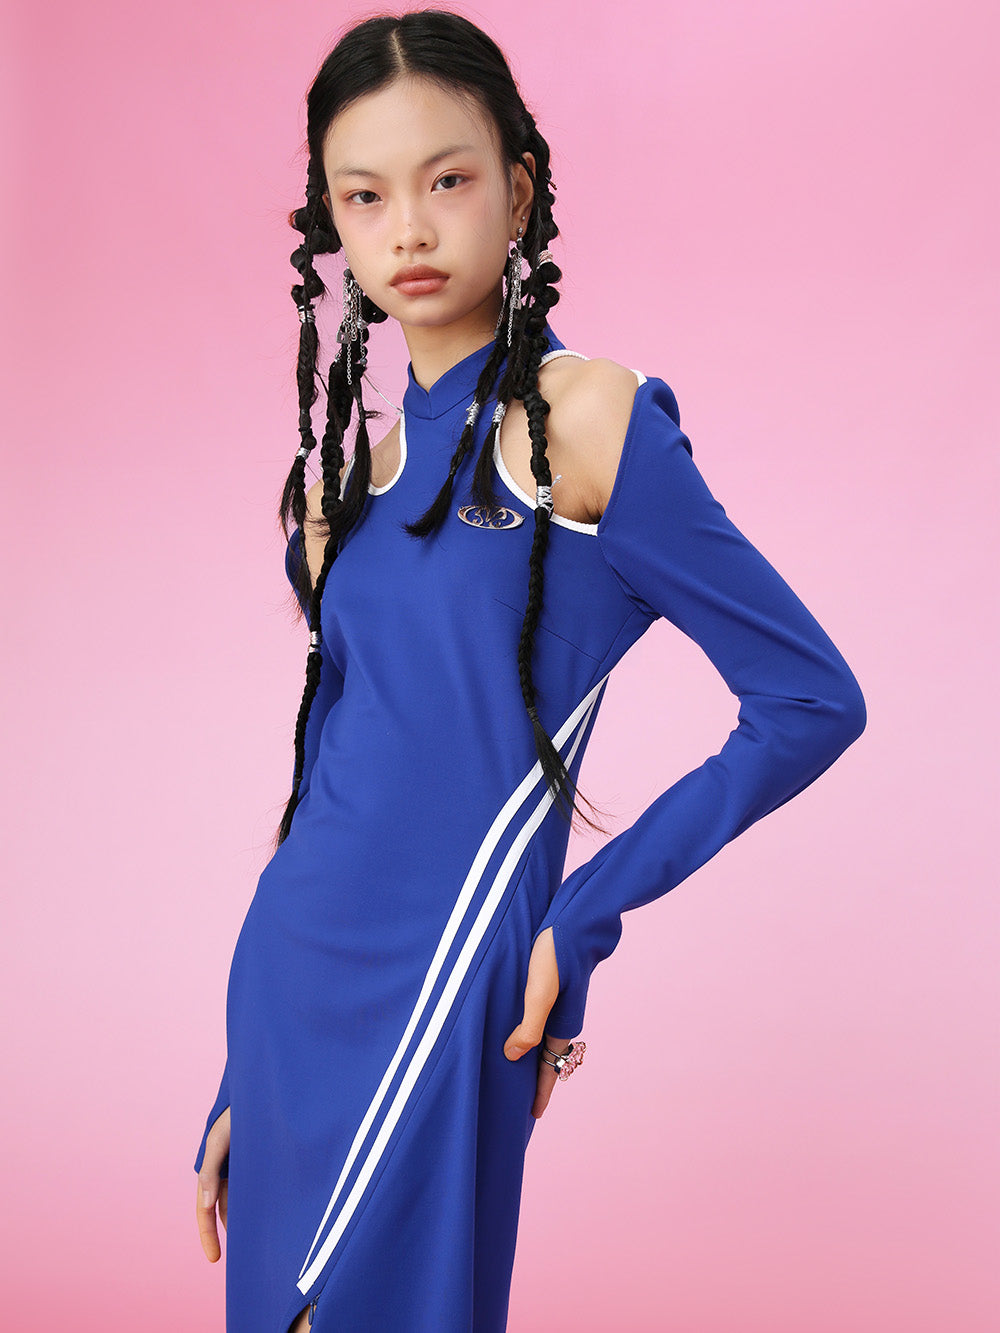 MUKZIN Colorblock Stretch Striking Sport Dress